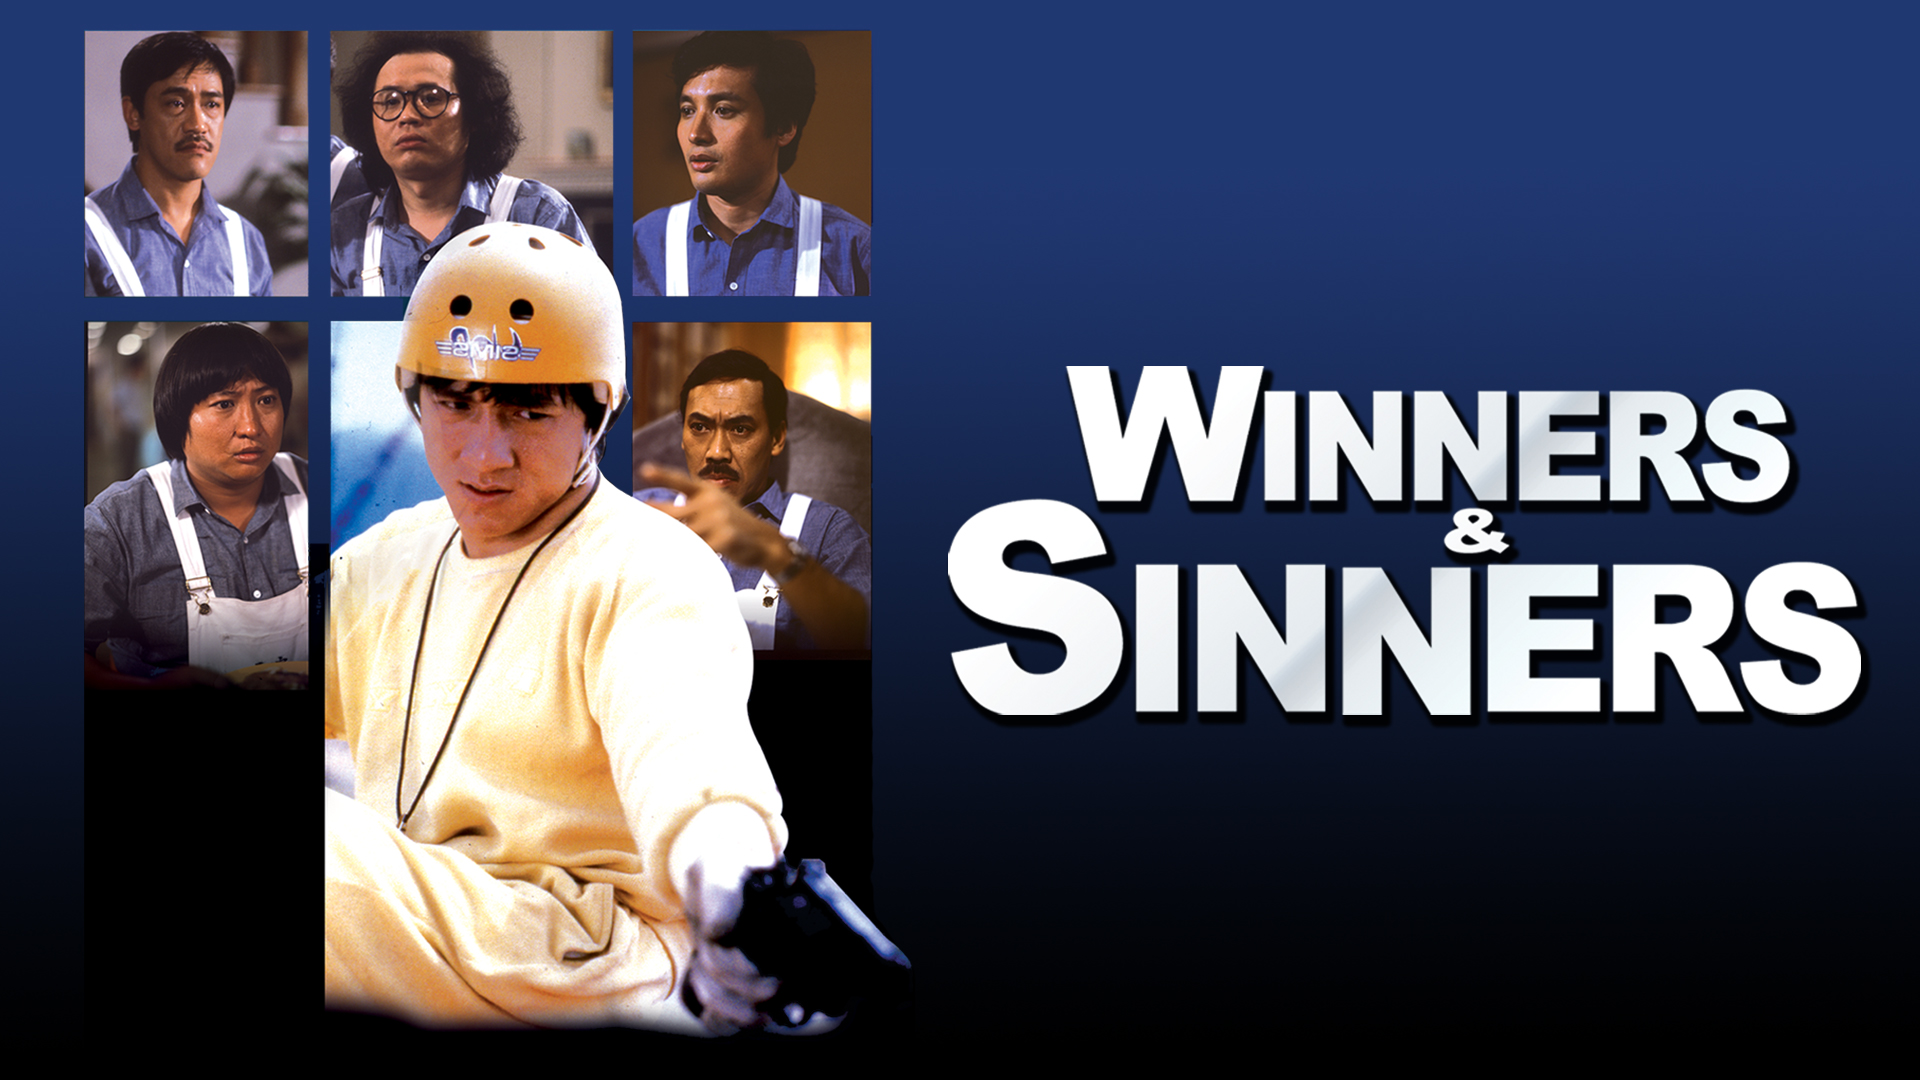 Winners And Sinners [English-Language Version] 